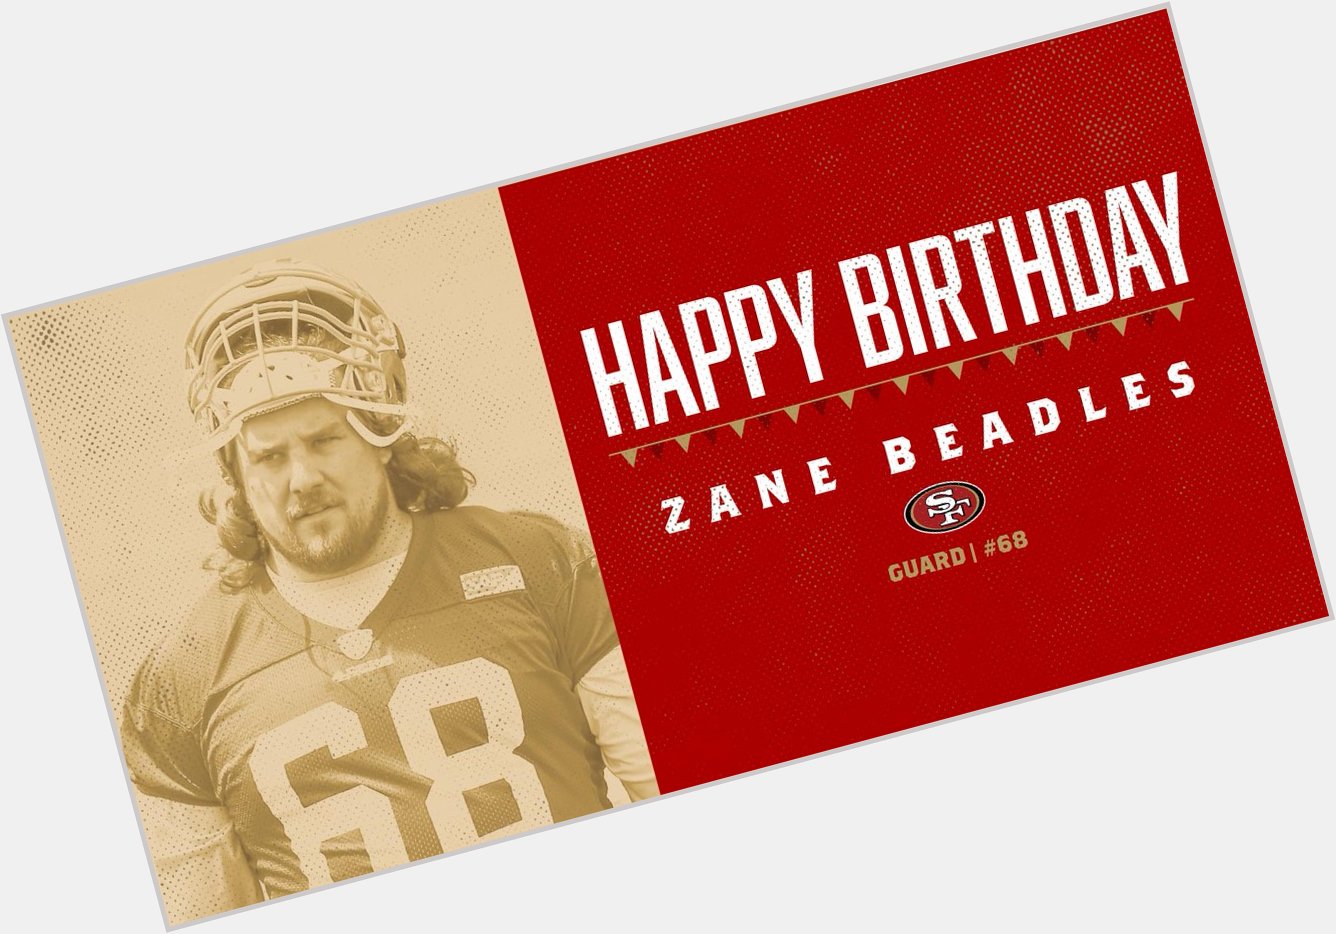 Happy birthday Zane Beadles! 